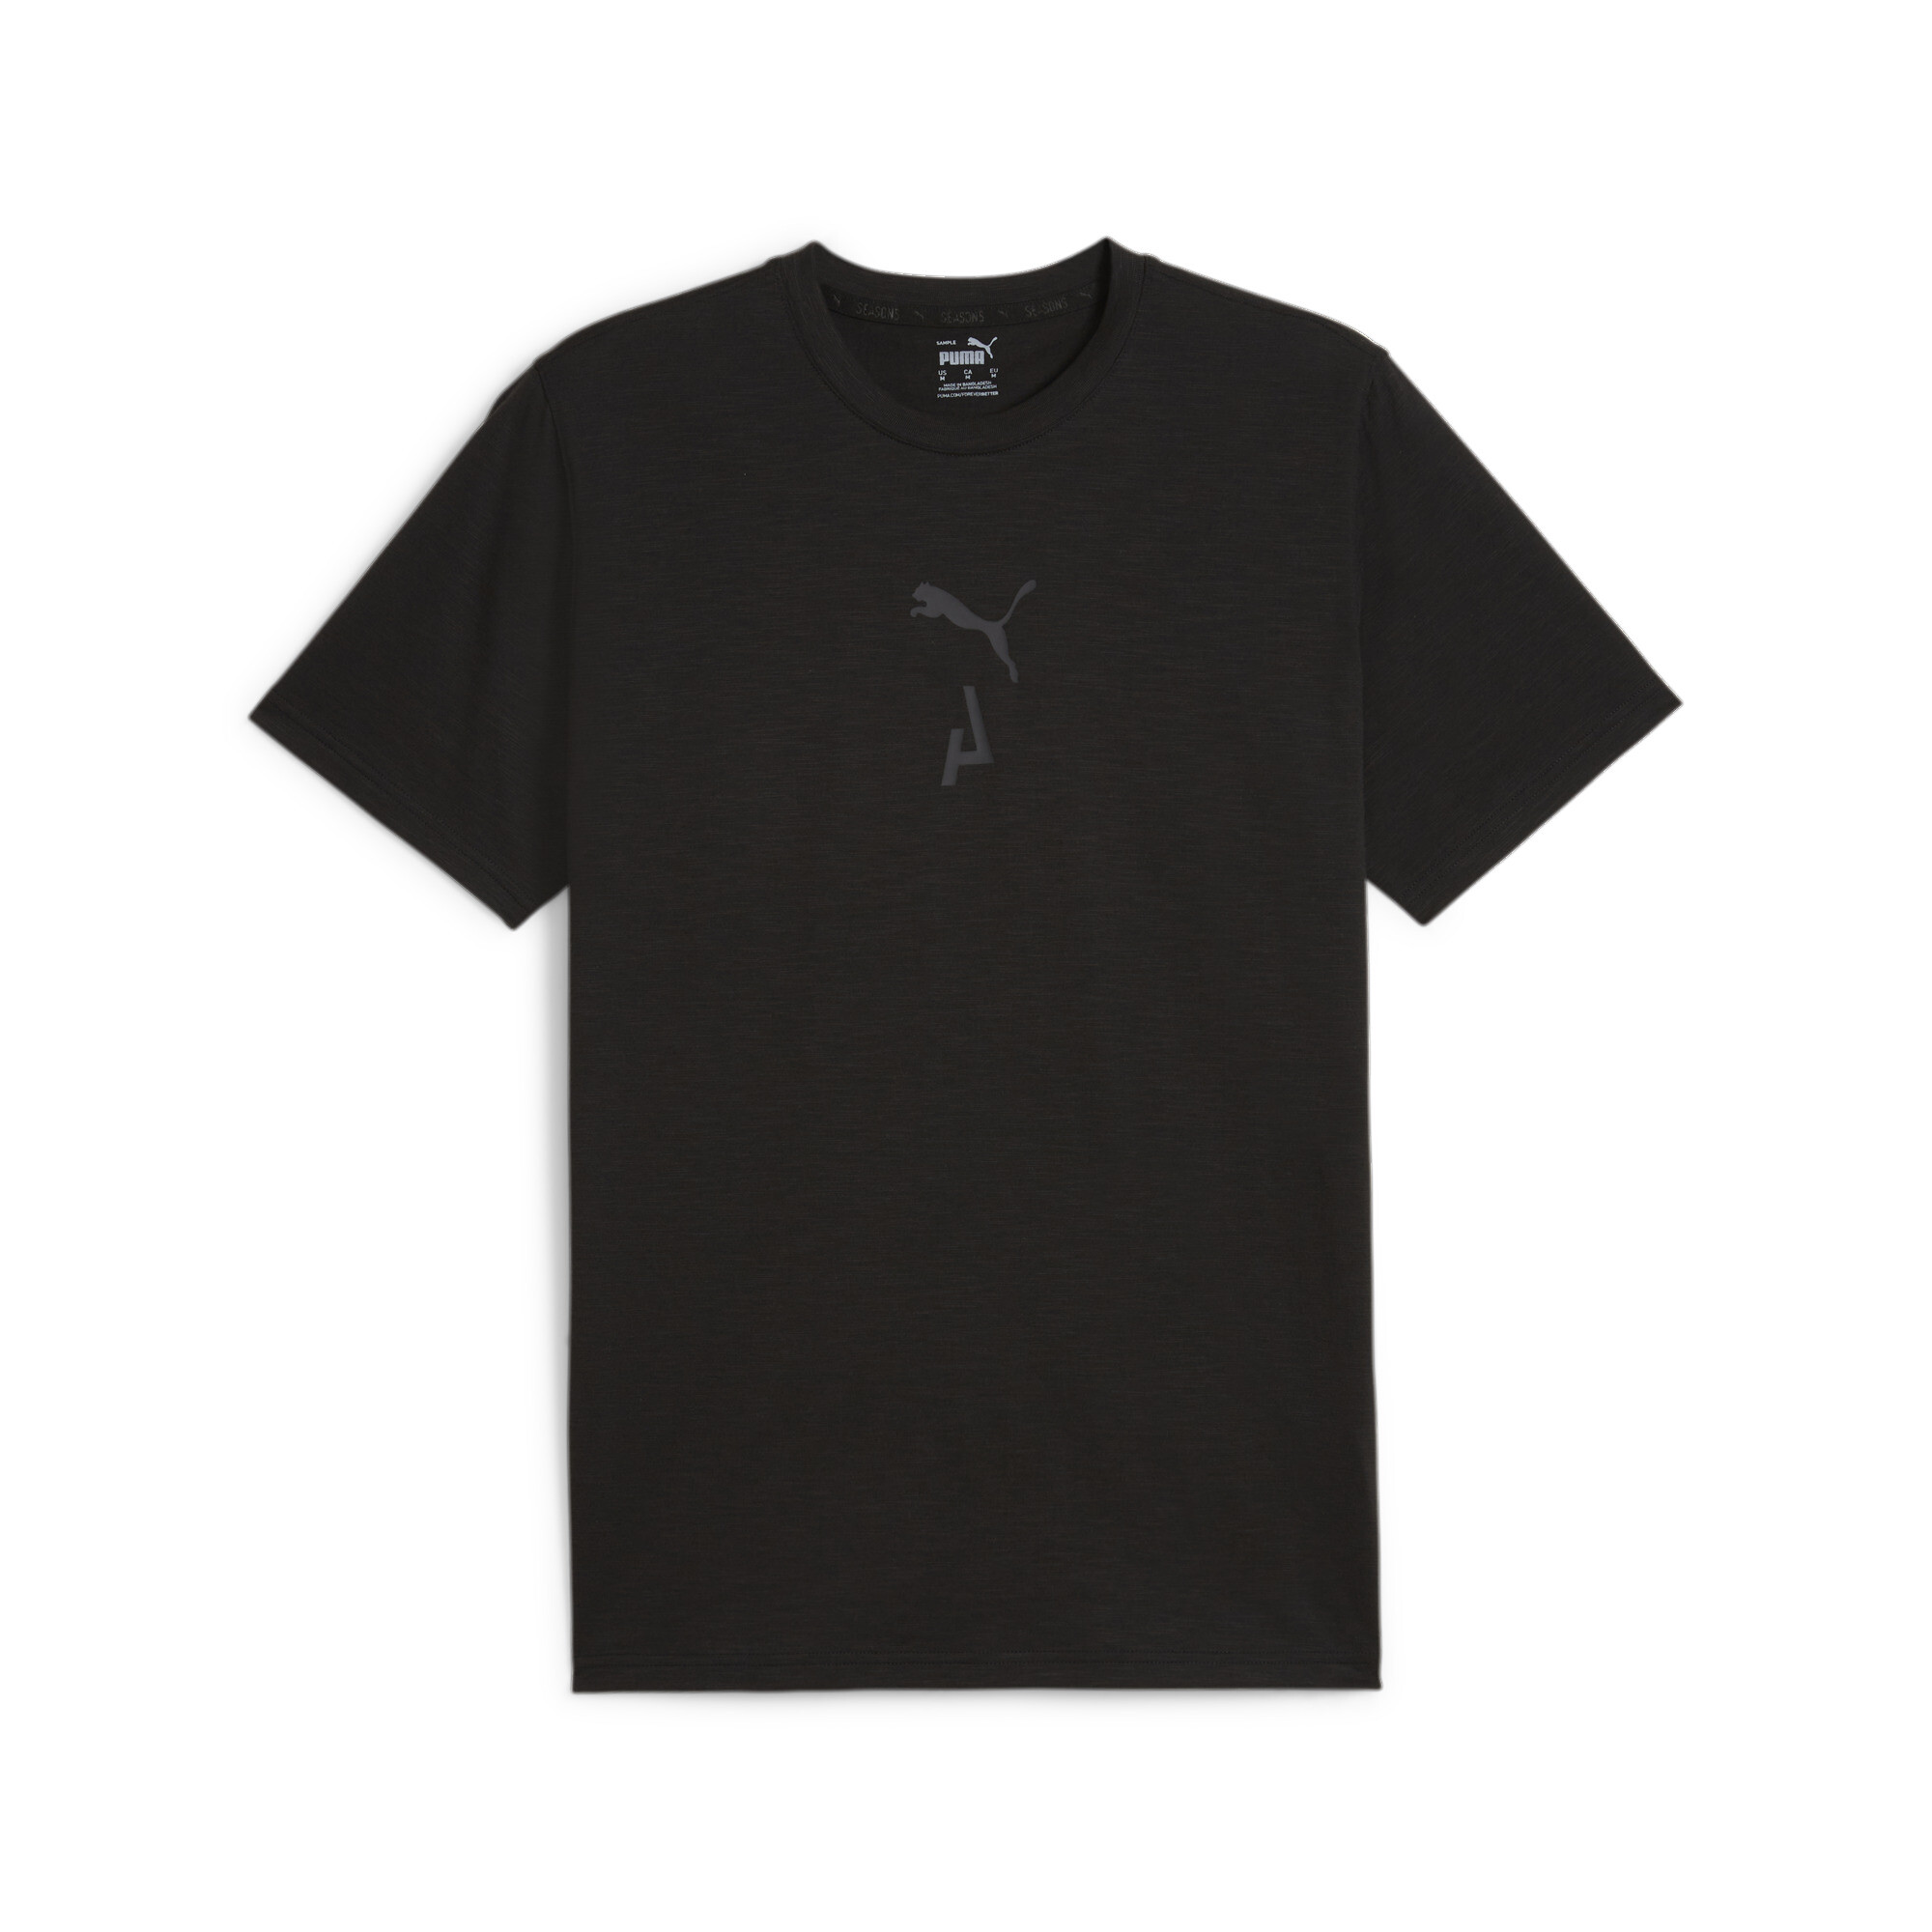 Men's PUMA MEN'S GRAPHIC SEASONS Training T-Shirt In Black, Size XS